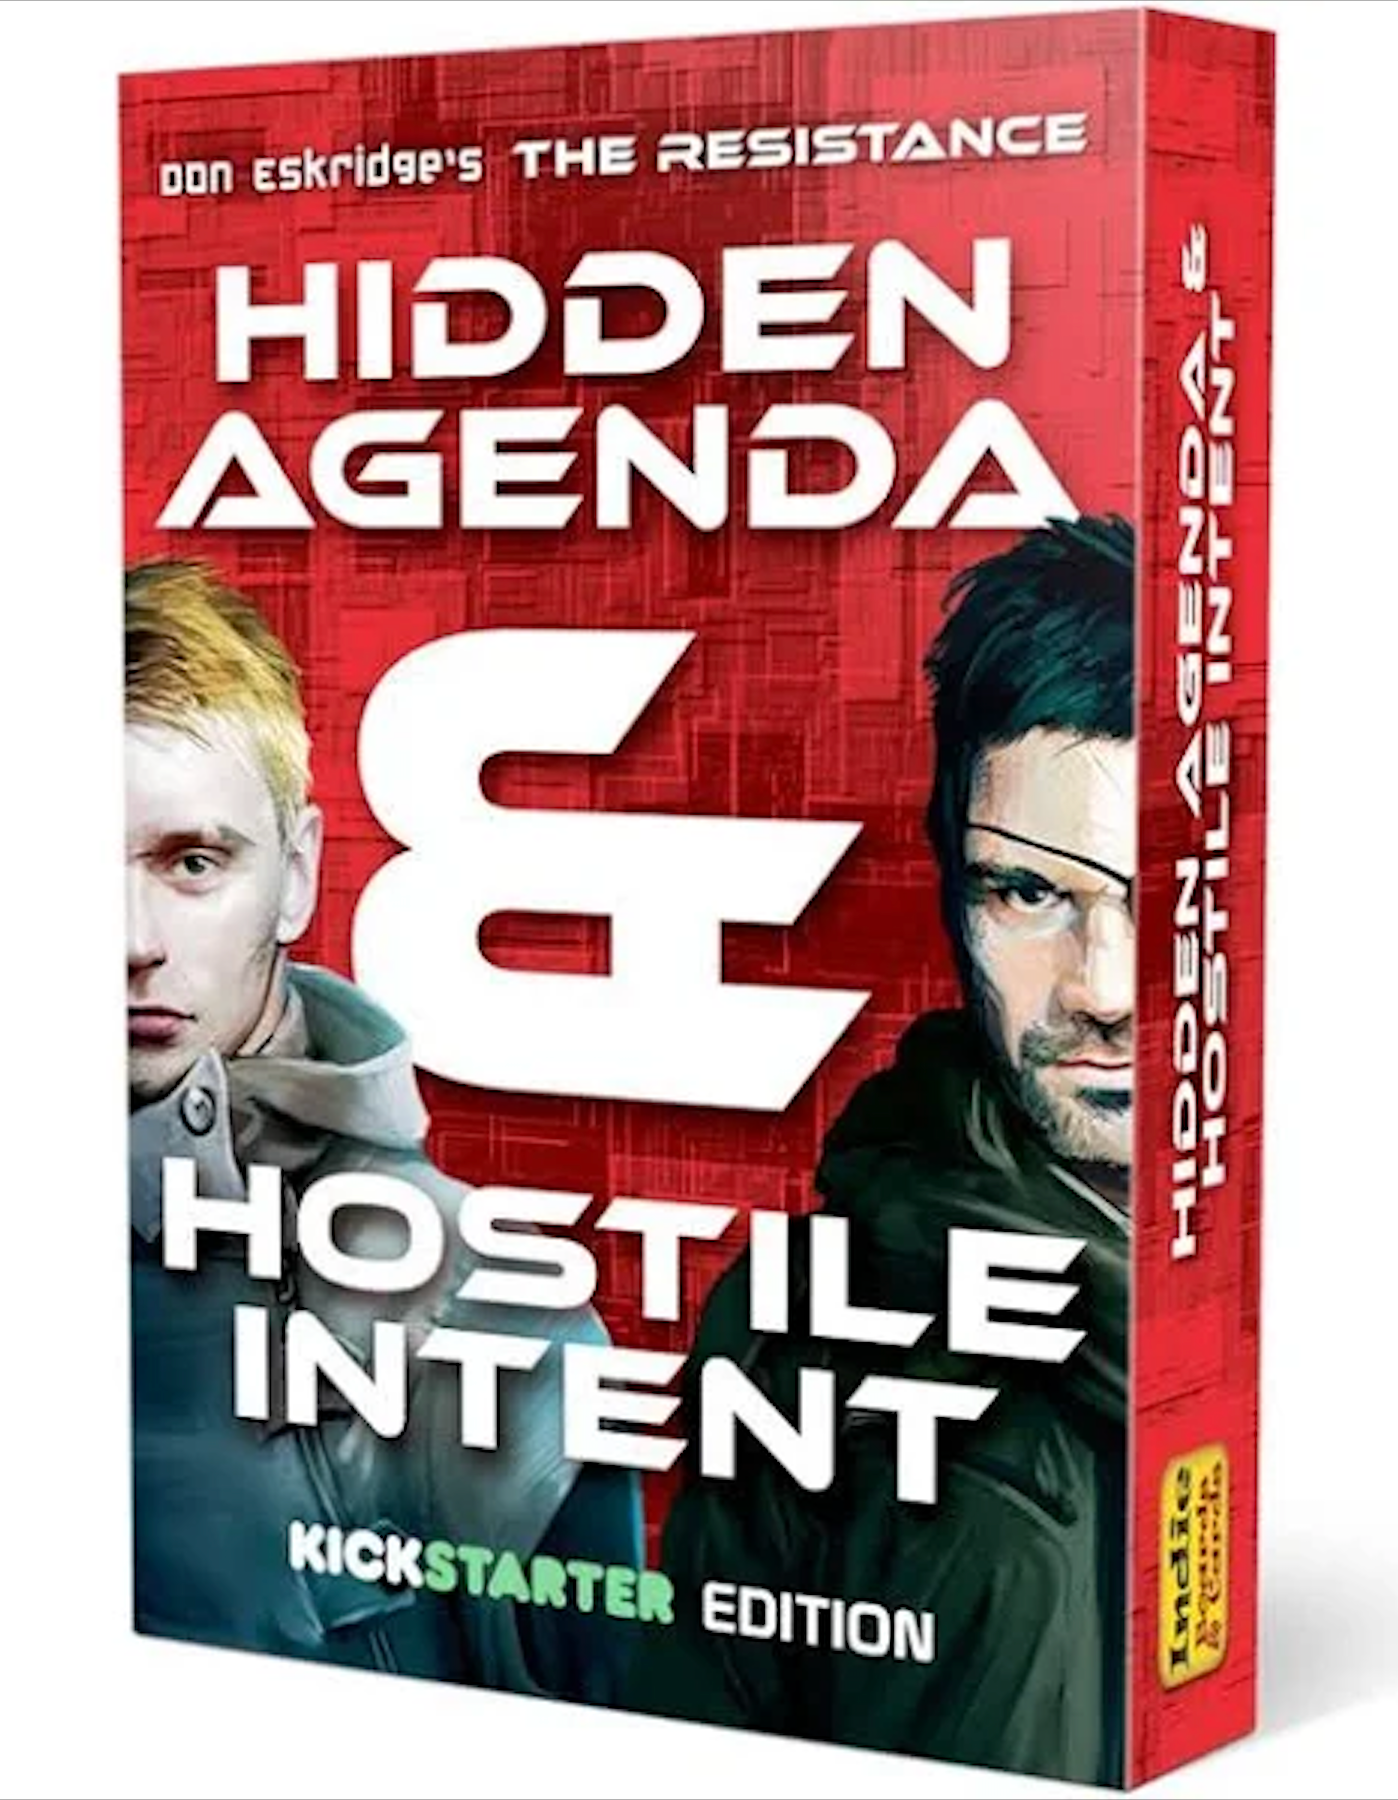 The Resistance: Hidden Agenda & Hostile Intent (Kickstarter Edition)